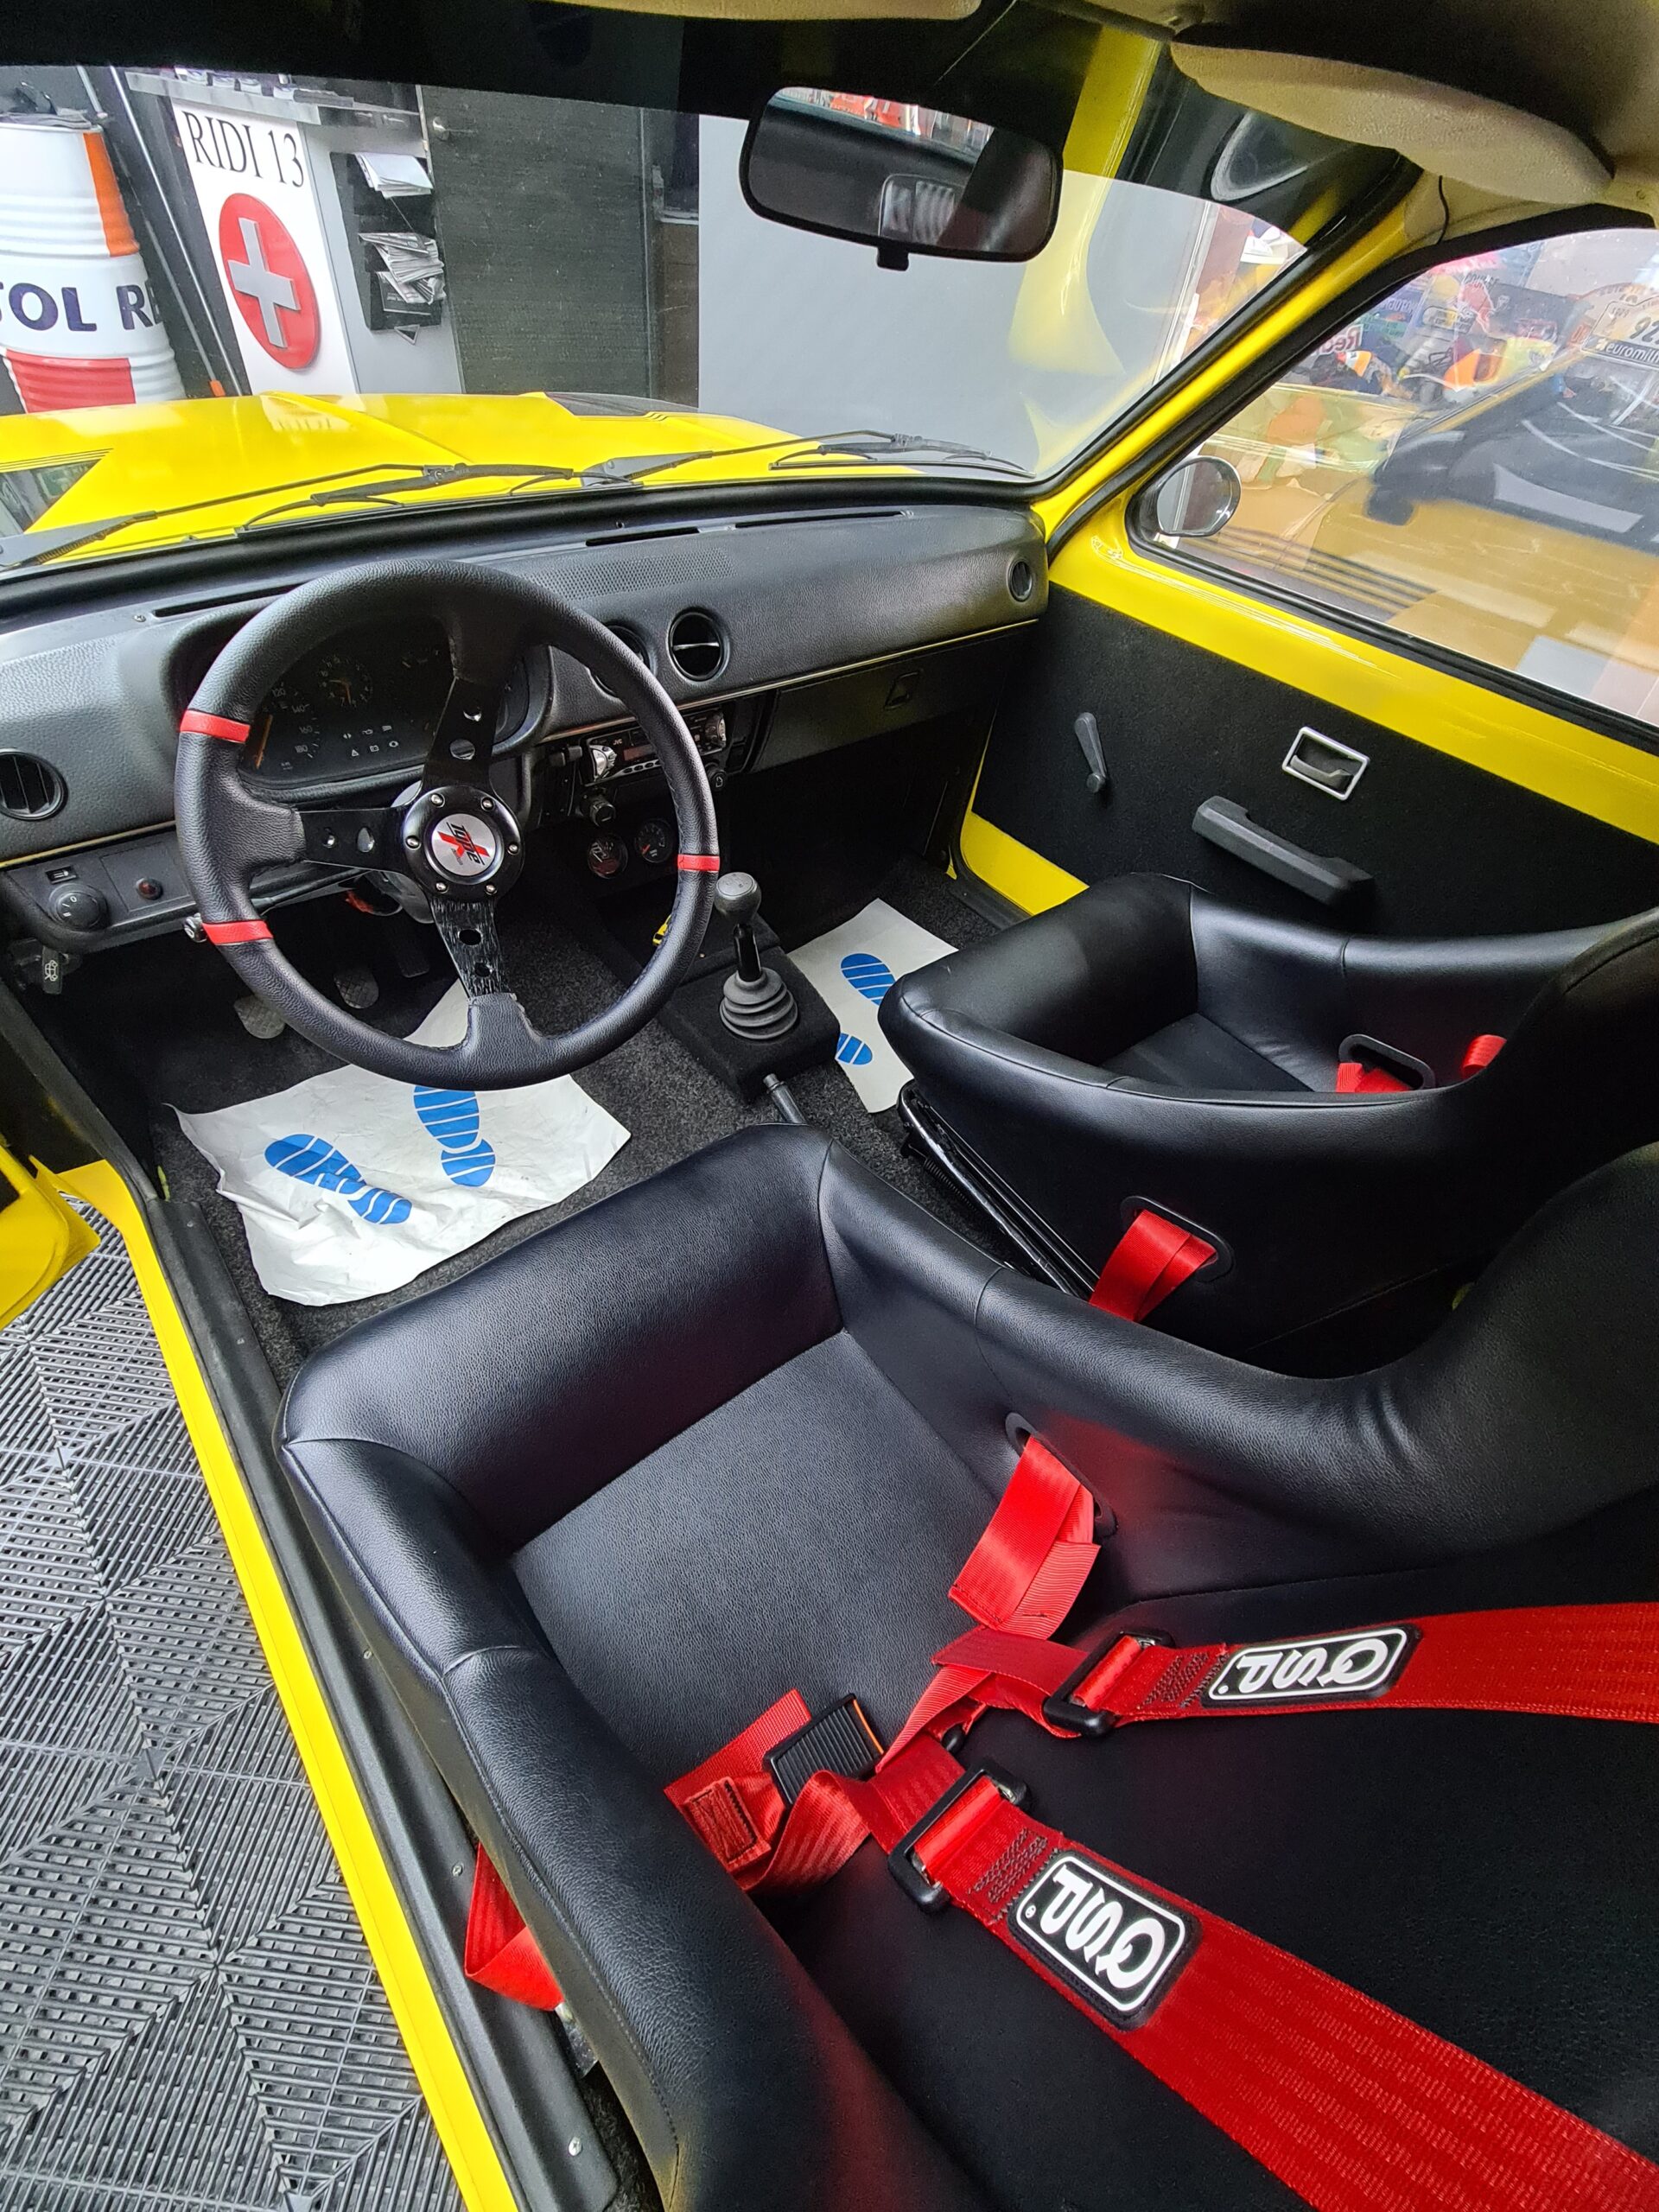 Yellow car interior